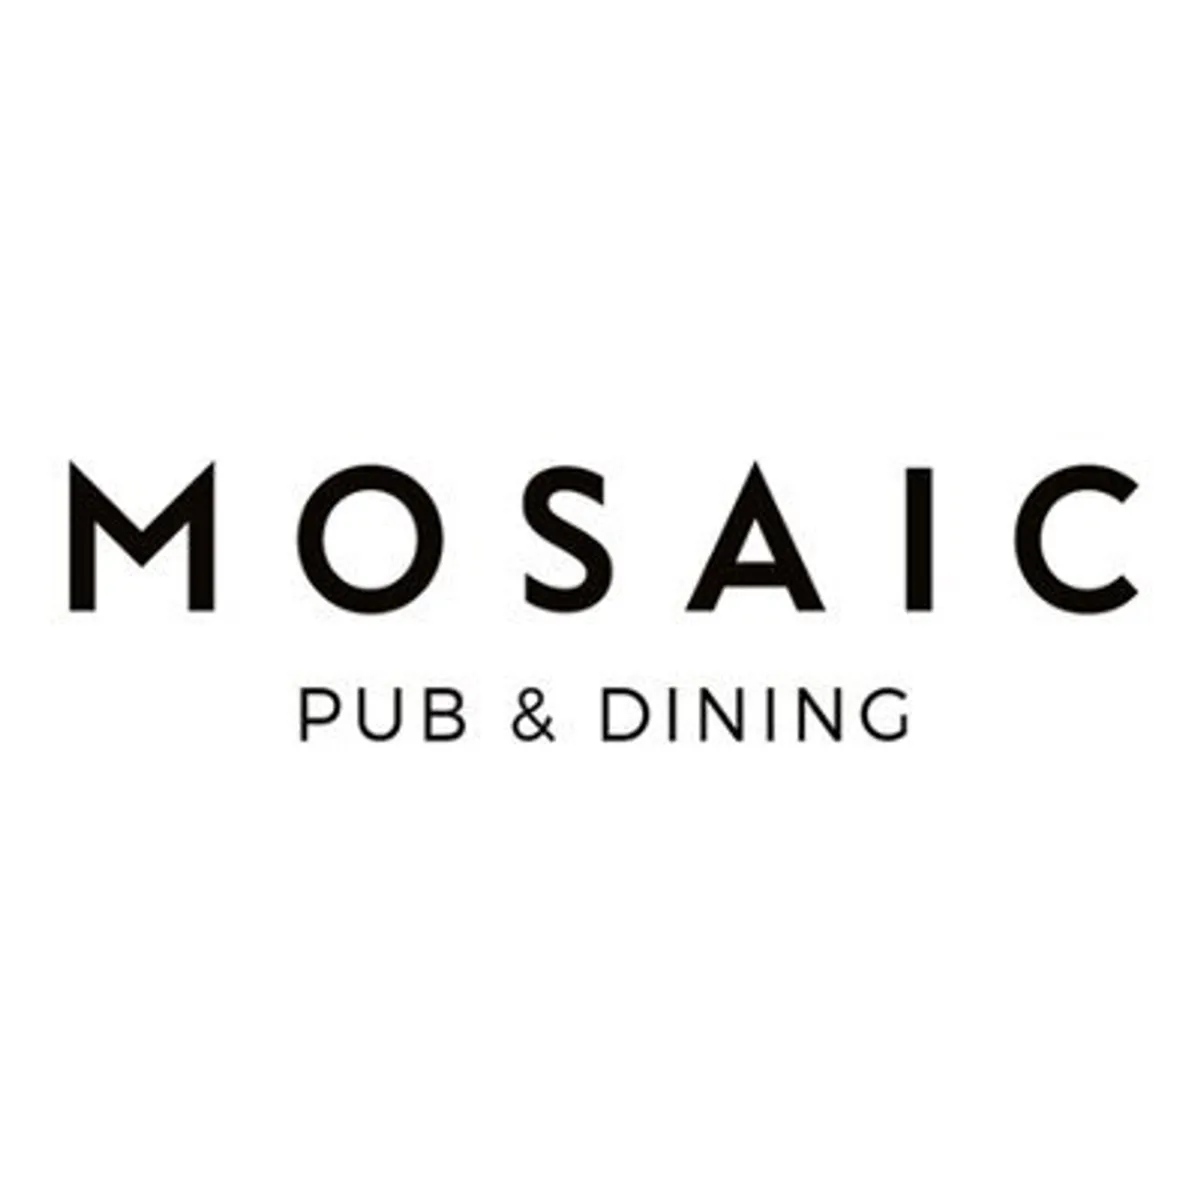 MOSAIC PUB DINING LOGO